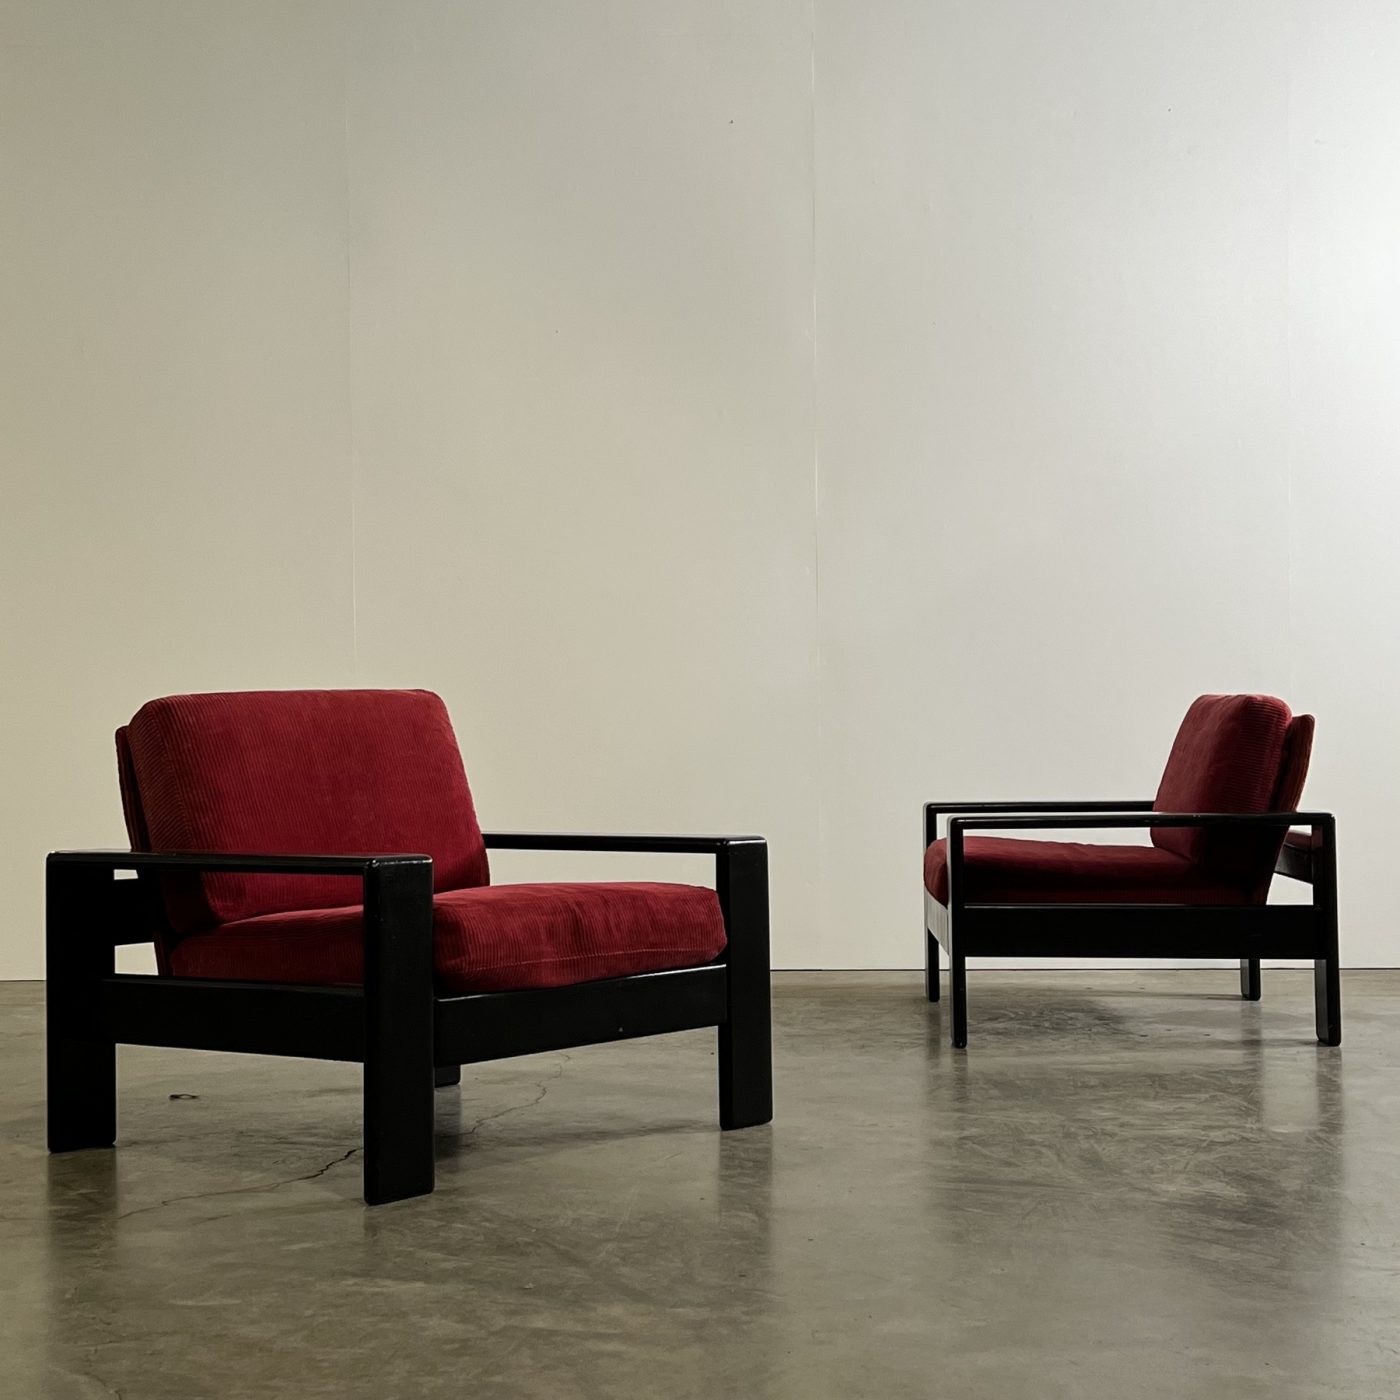 objet-vagabond-large-armchairs0003